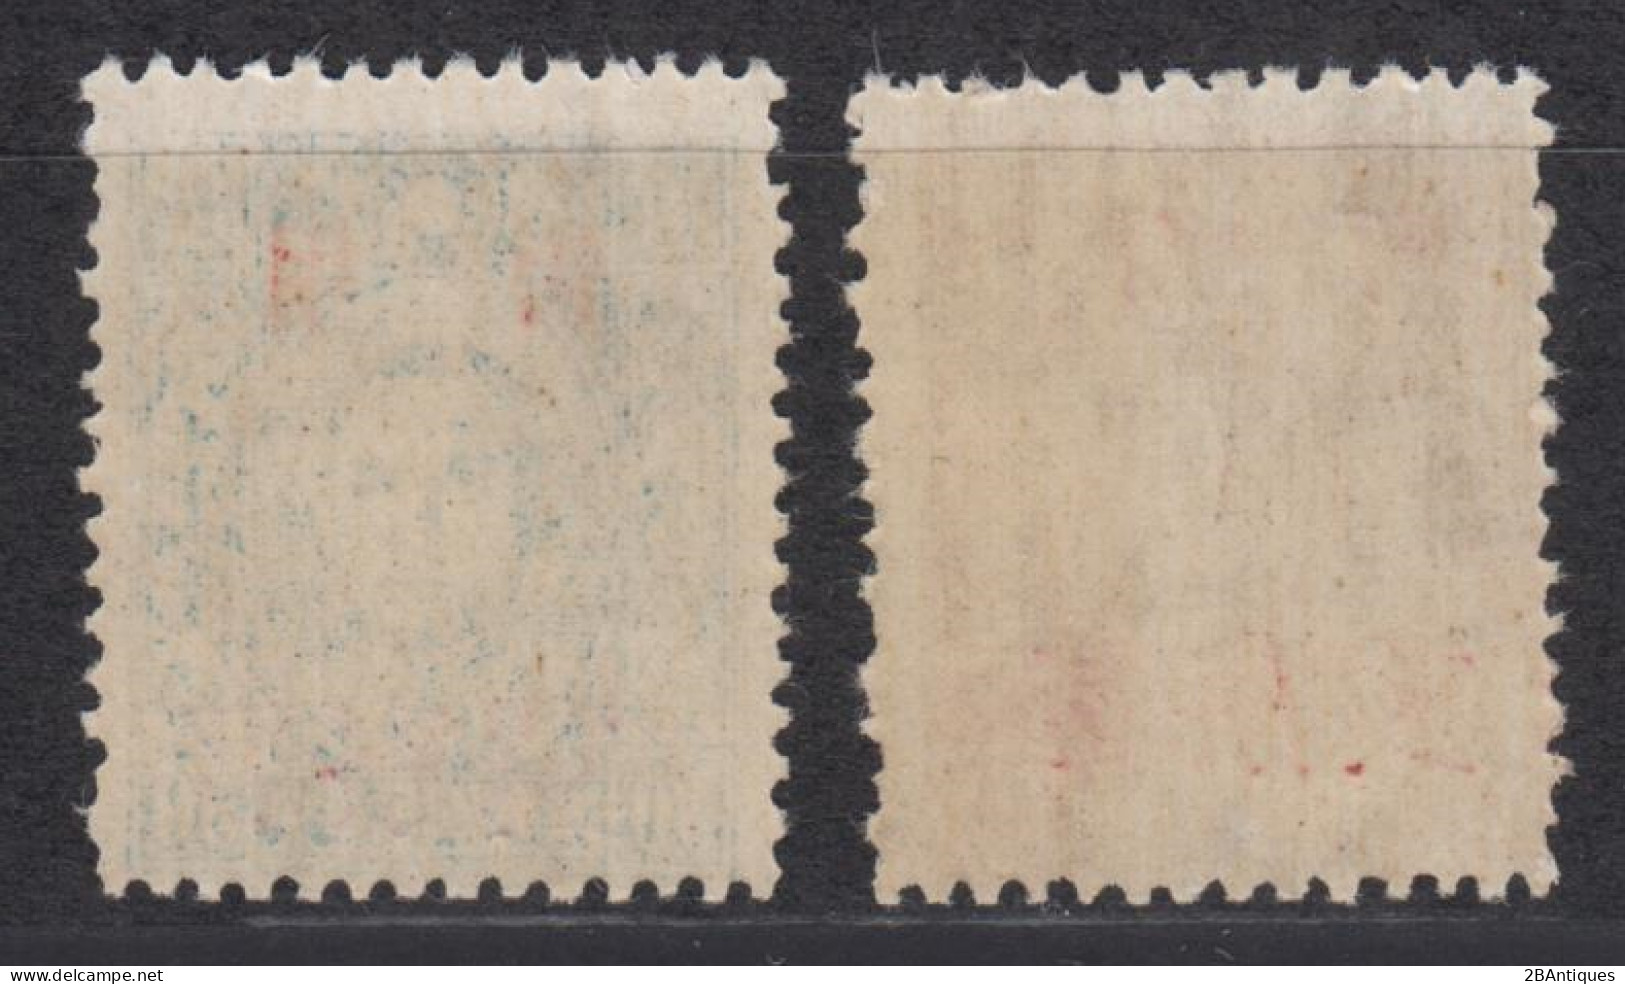 NORTH CHINA SHANXI-QAHAR-HEBEI 1945 - Inner Mongolia Stamps With Overprint "Ji Cha Jin" - Chine Du Nord 1949-50